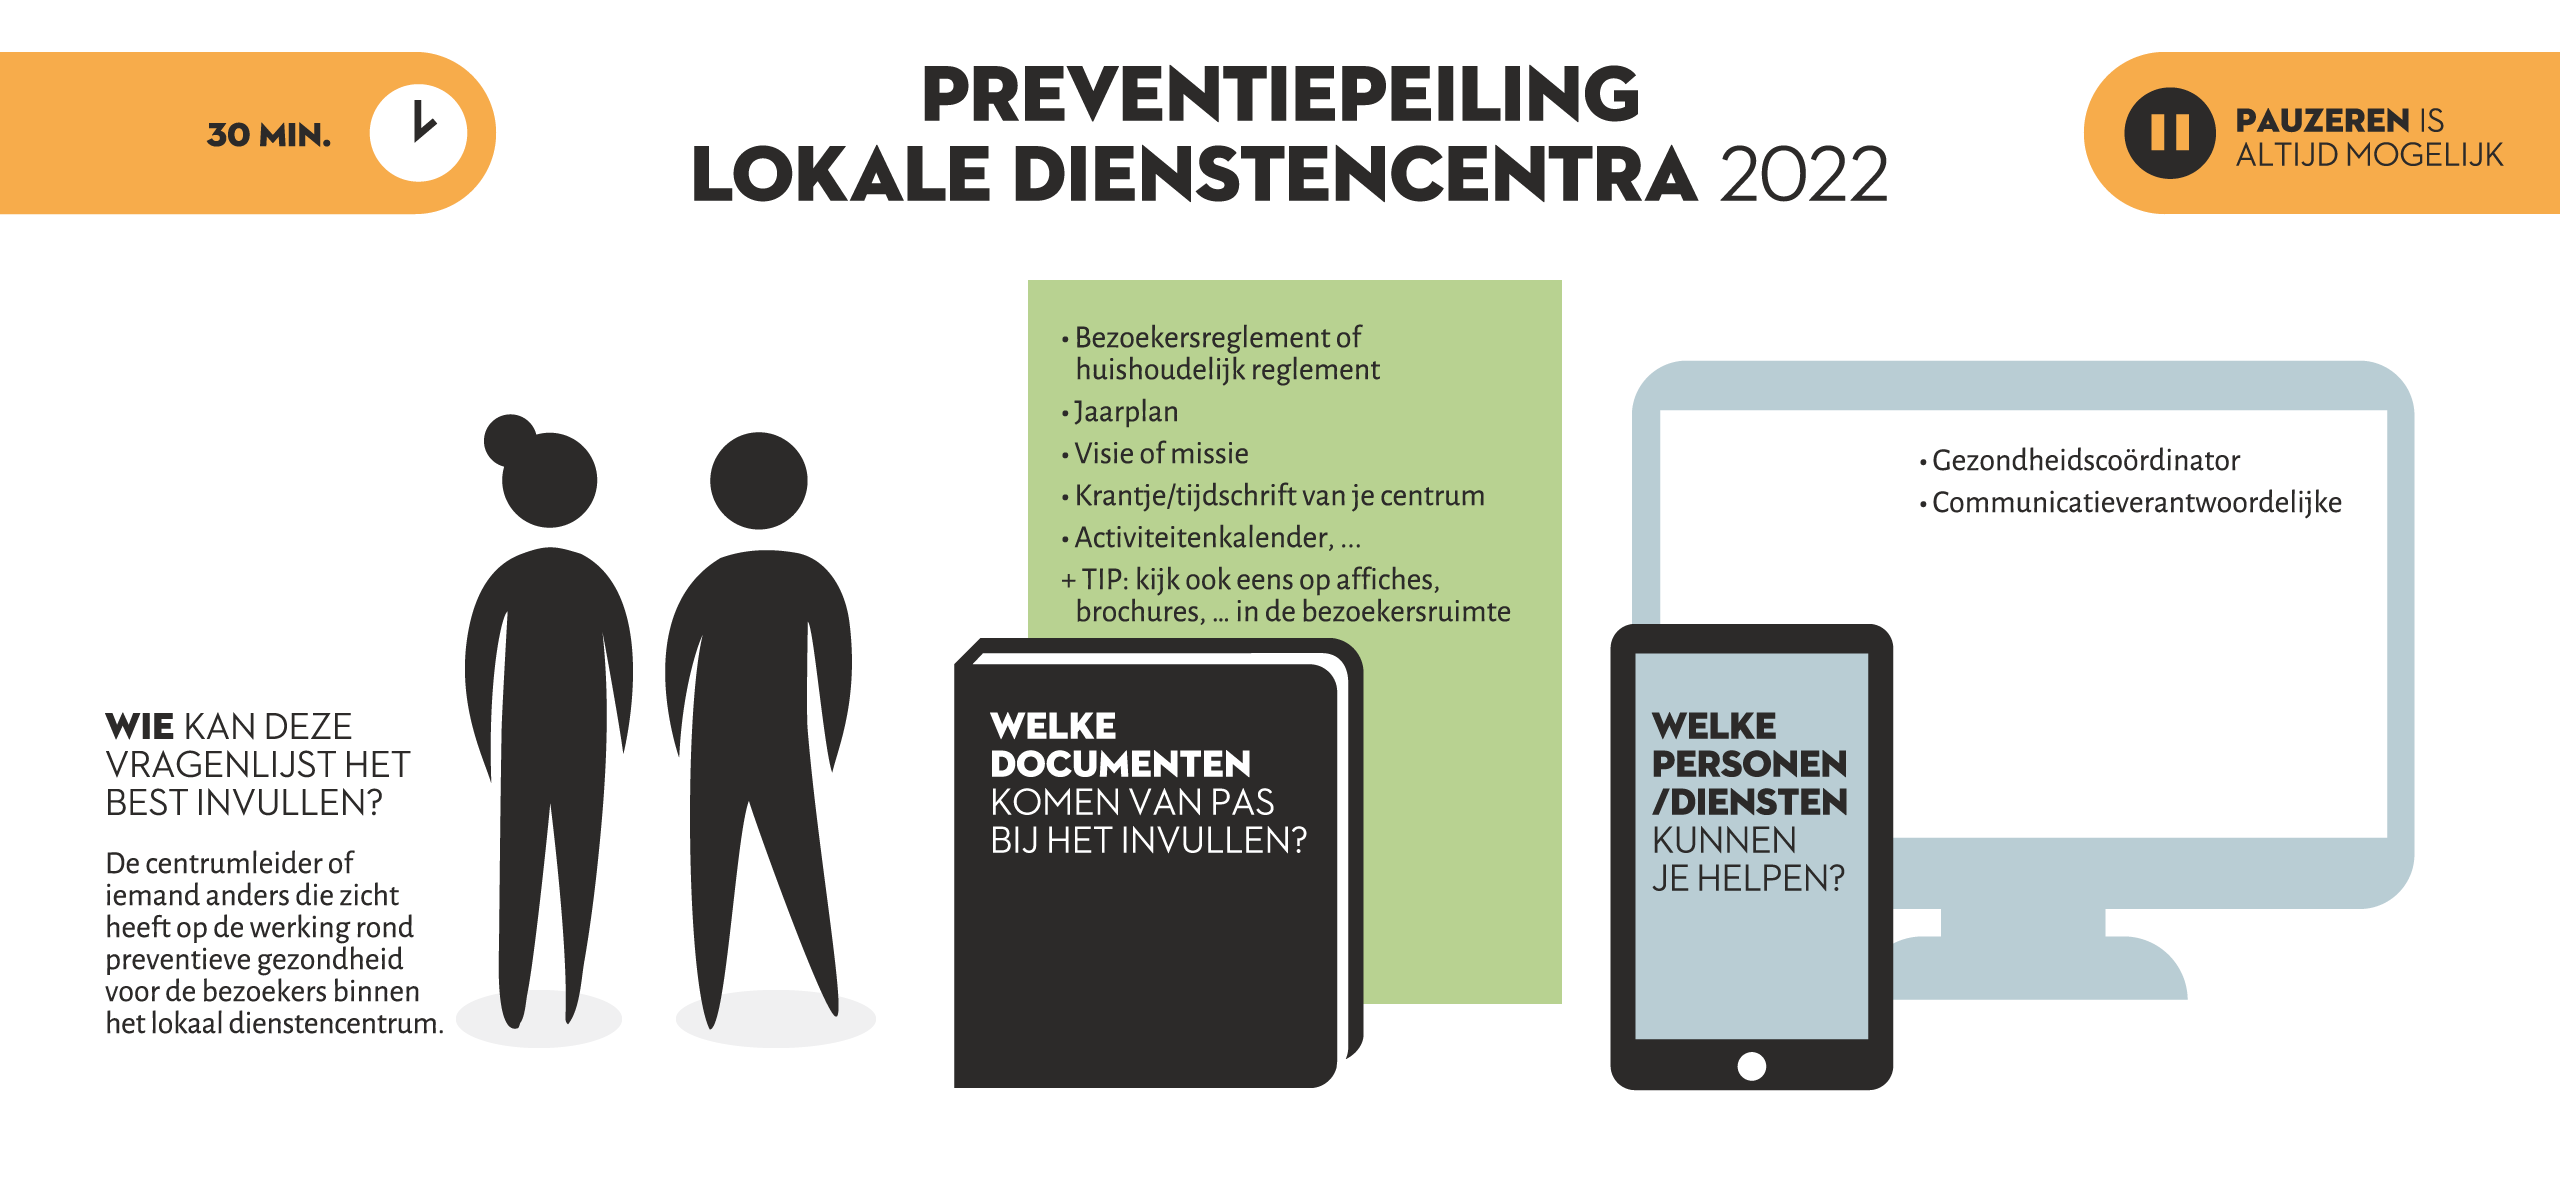 Instructie-infographic preventiepeiling lokale dienstencentra 2022